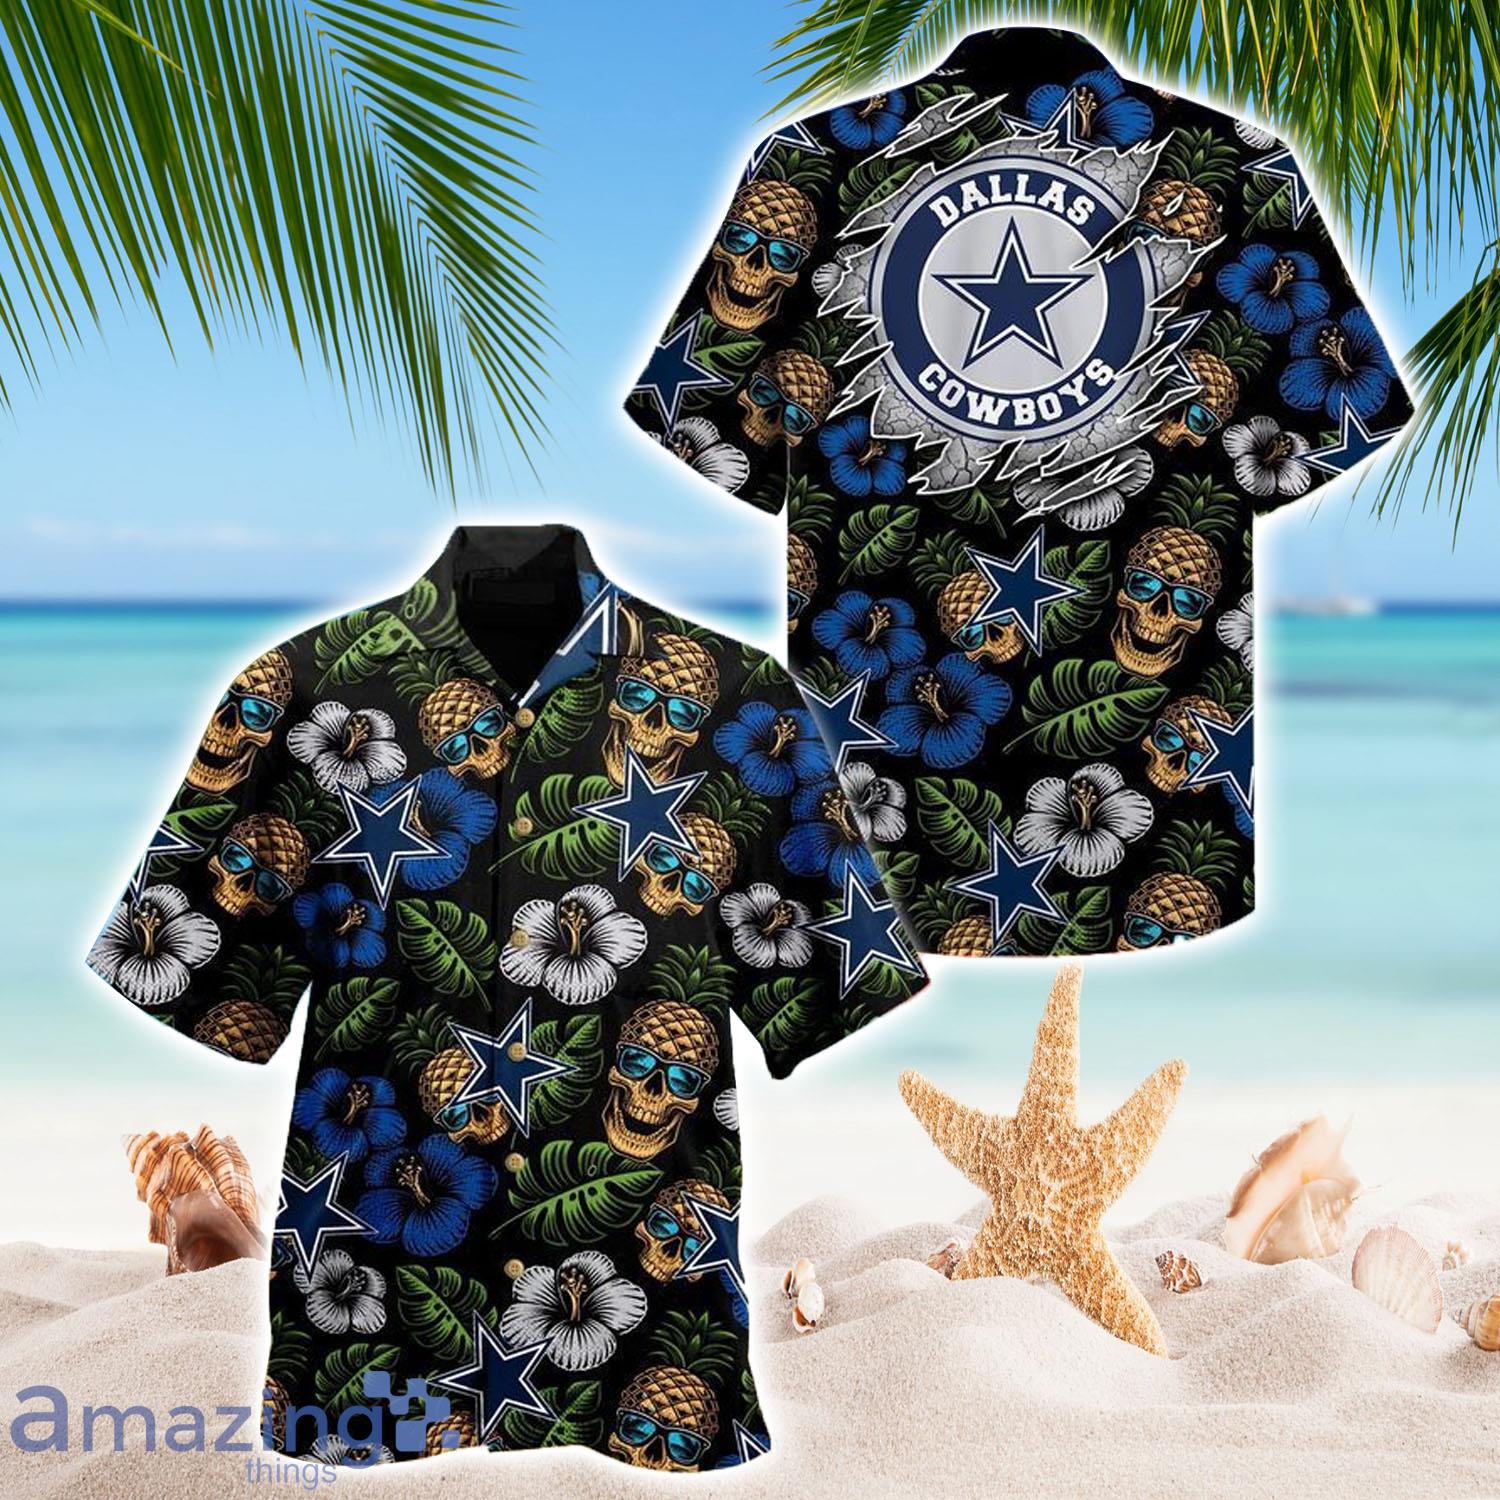 Dallas Cowboy NFL Pineapple Hawaiian Shirt - Dallas Cowboy NFL Pineapple Hawaiian Shirt